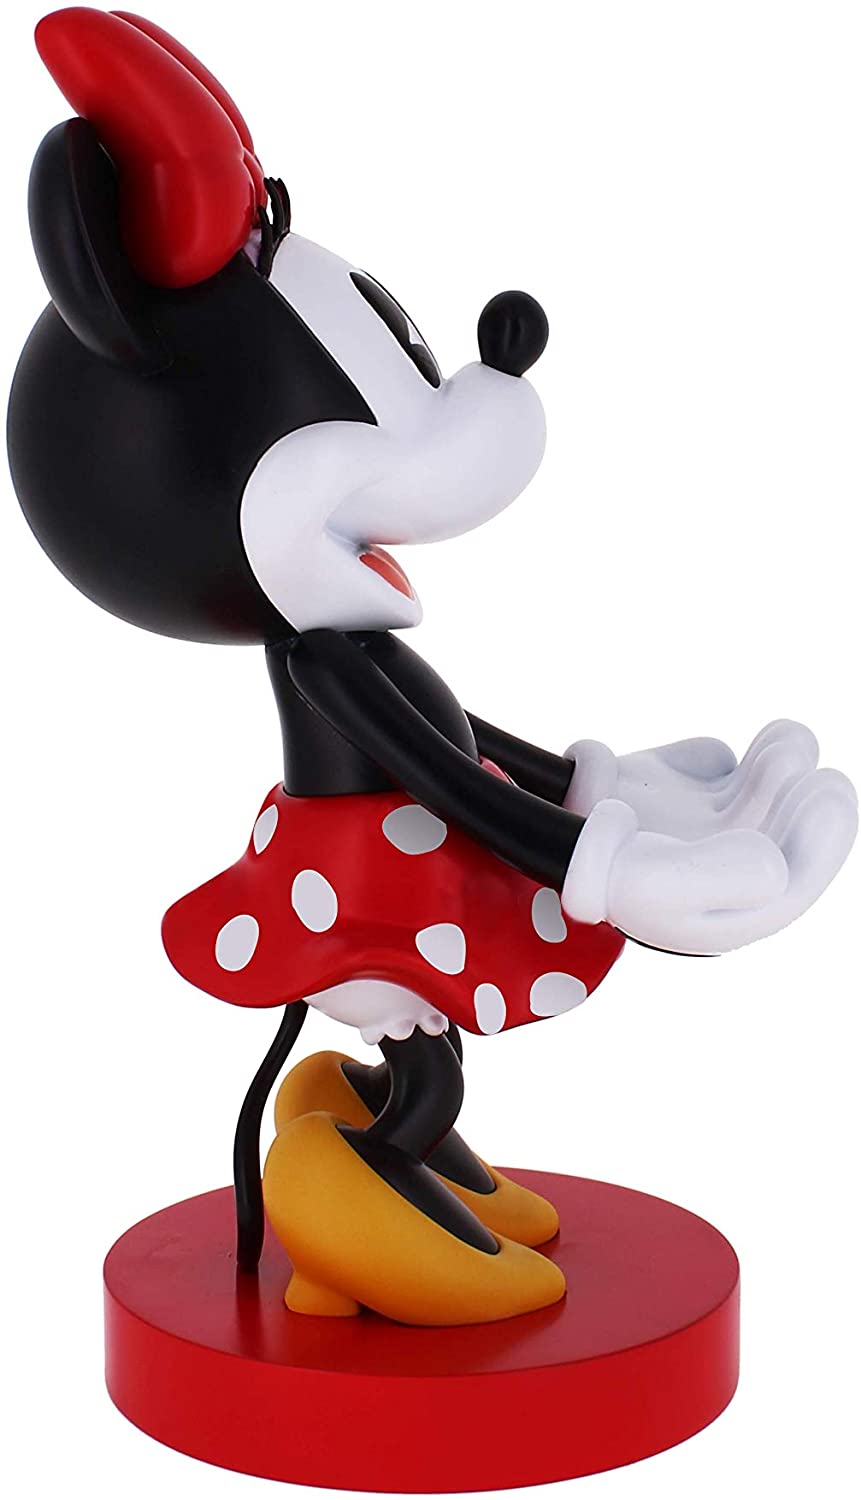 Figurine support Disney Minnie Mouse 20 cm EXQUISITE GAMING - 73990015367 